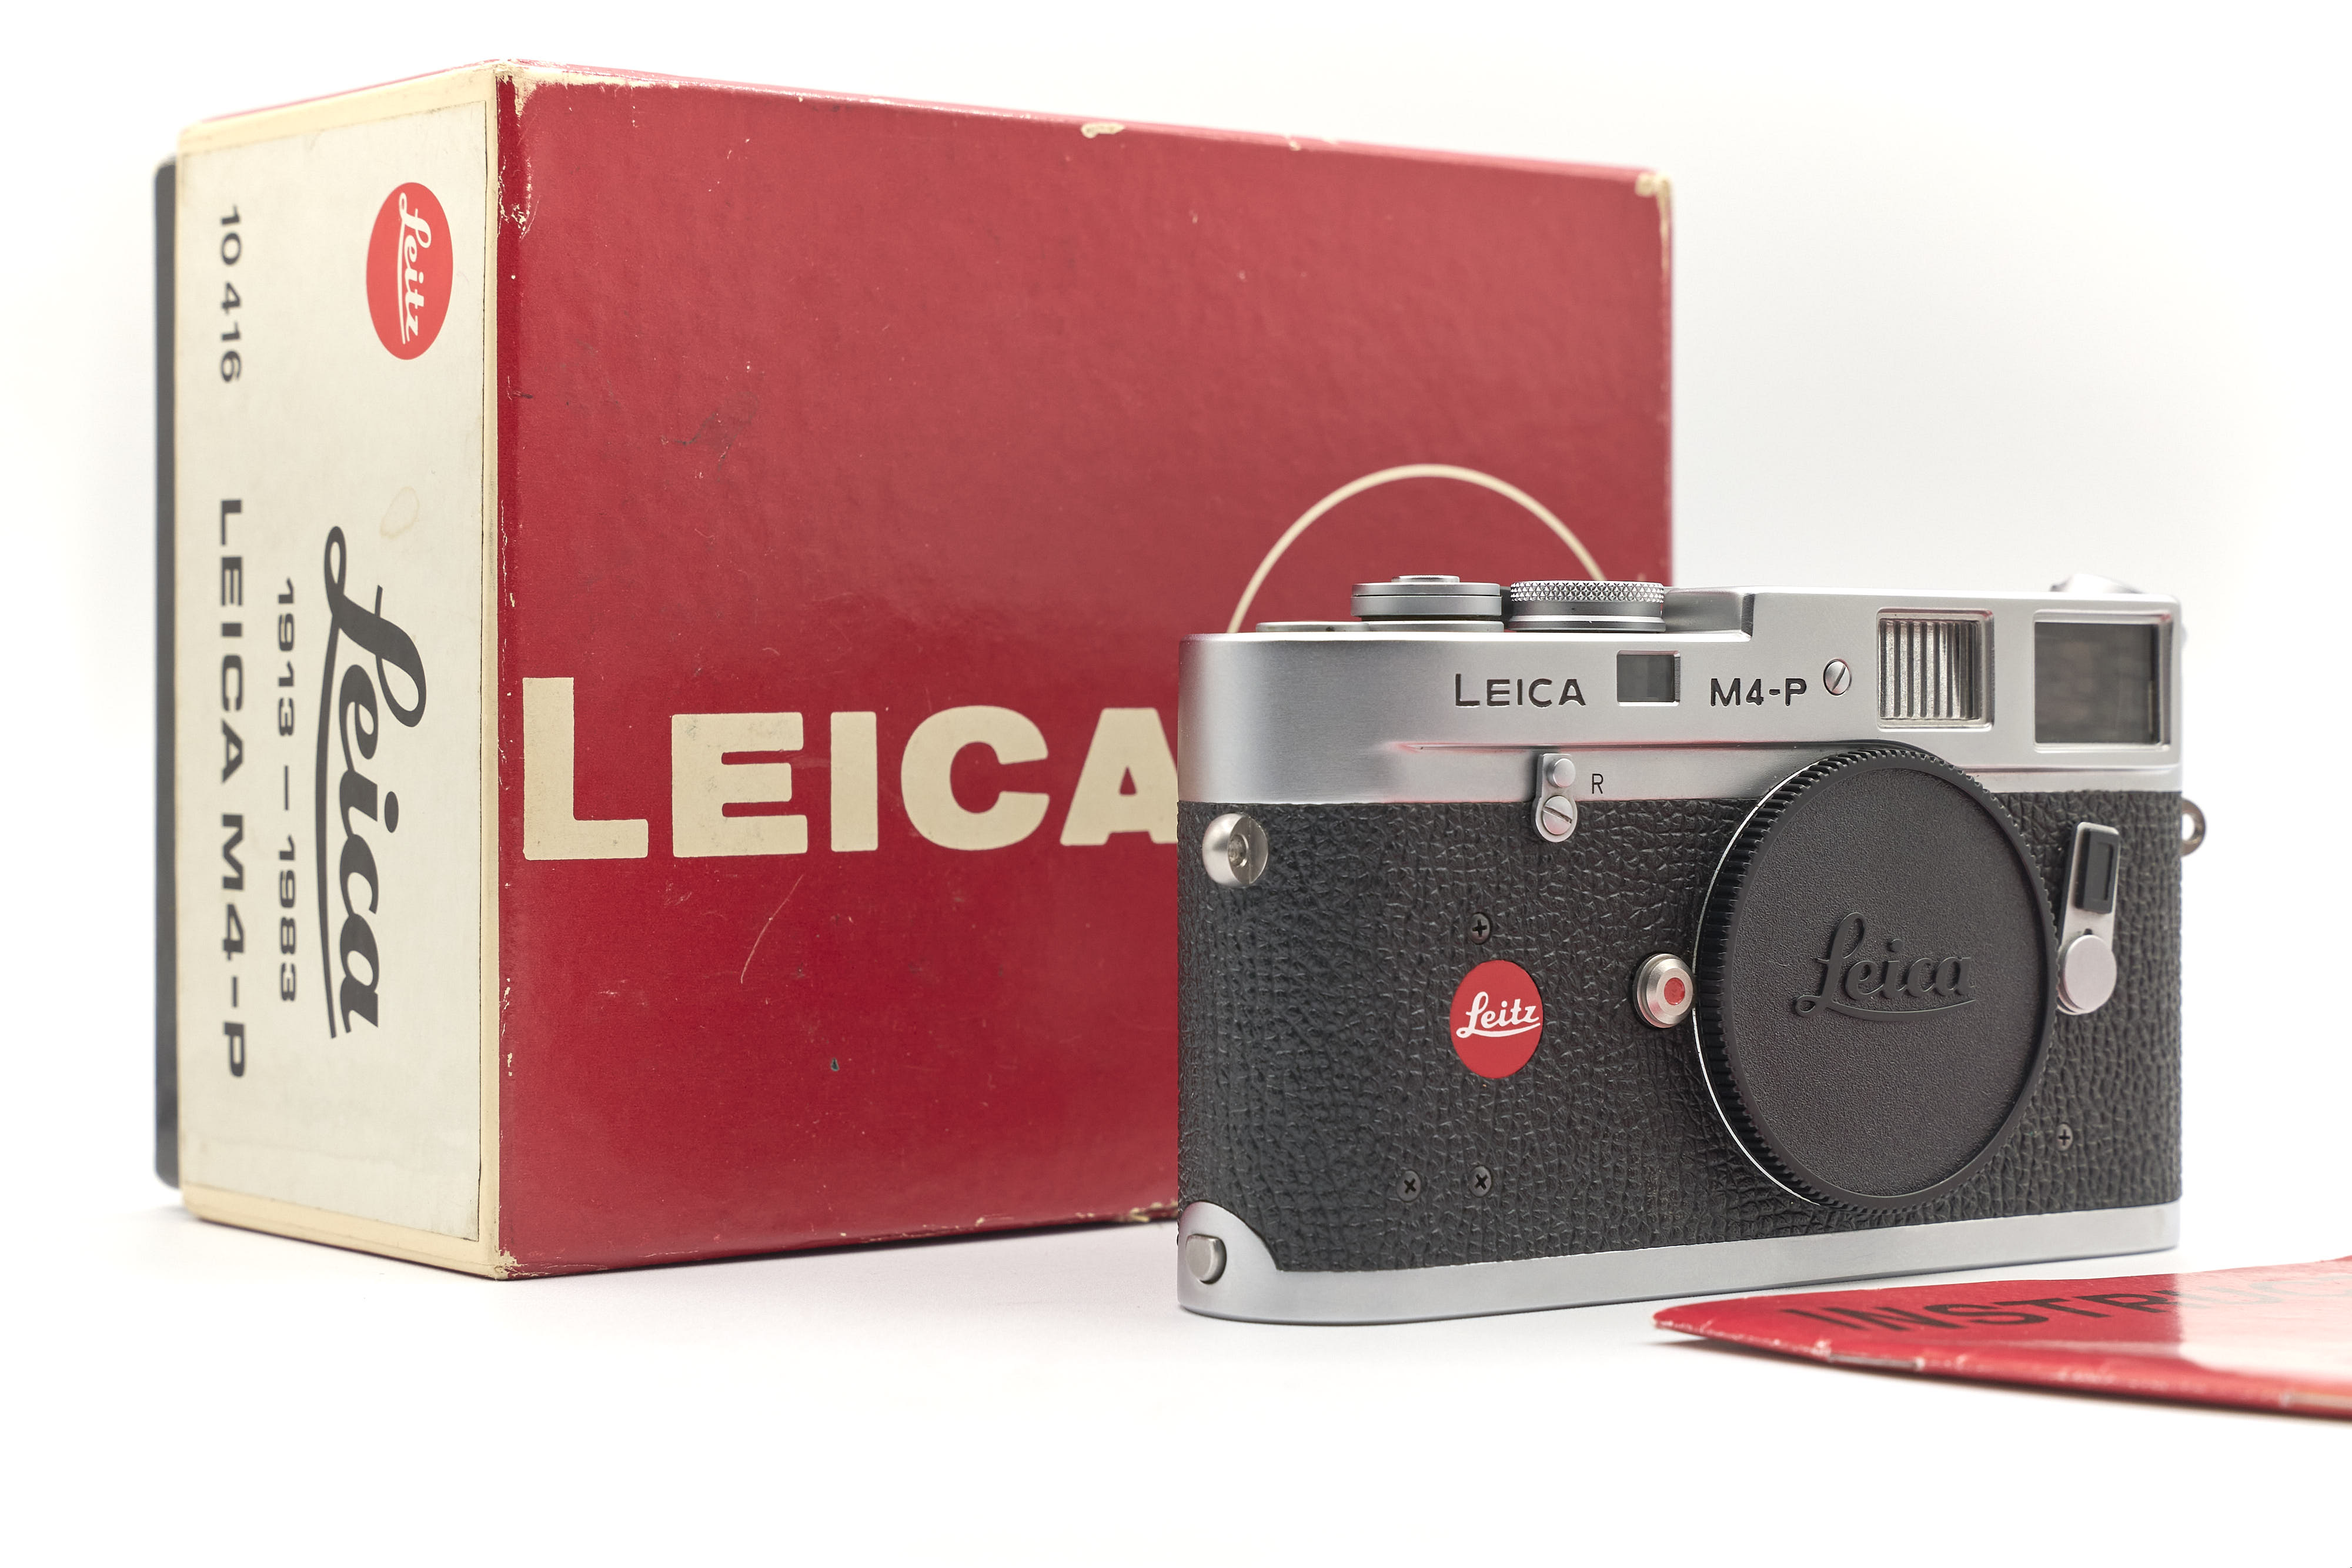 Leica M4-P Chrome Finish 1913 - 1983